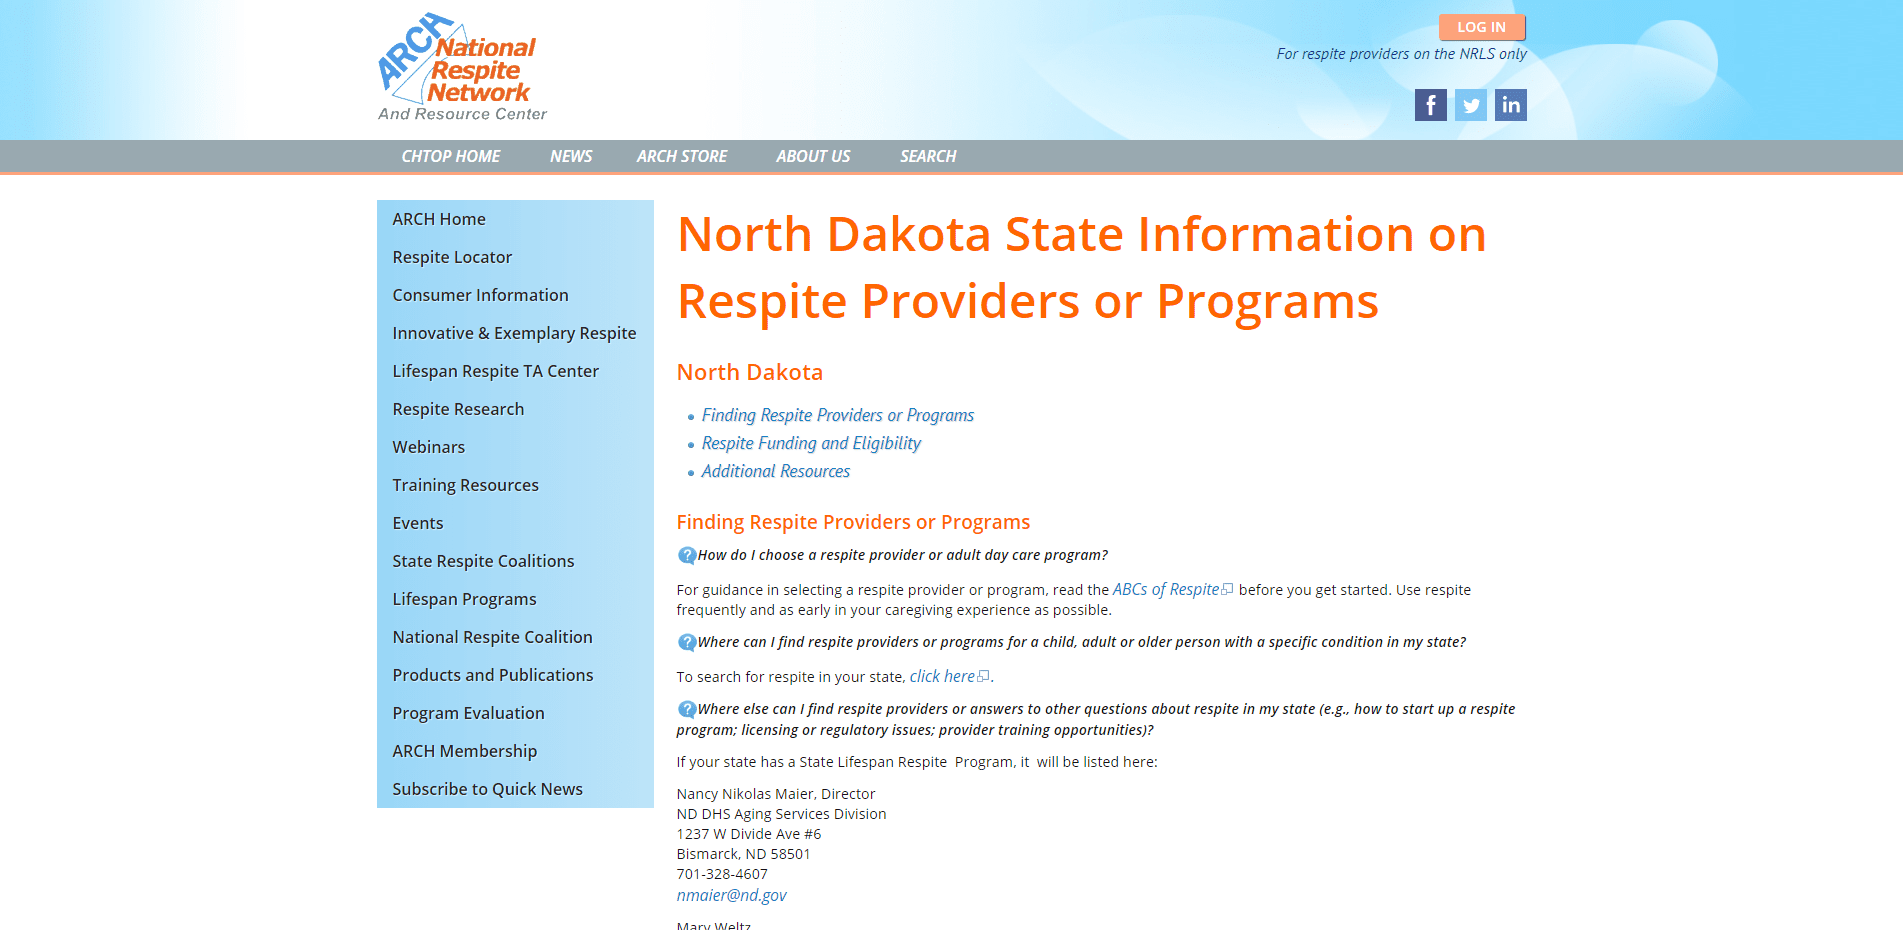 North Dakota State Information on Respite Providers or Programs